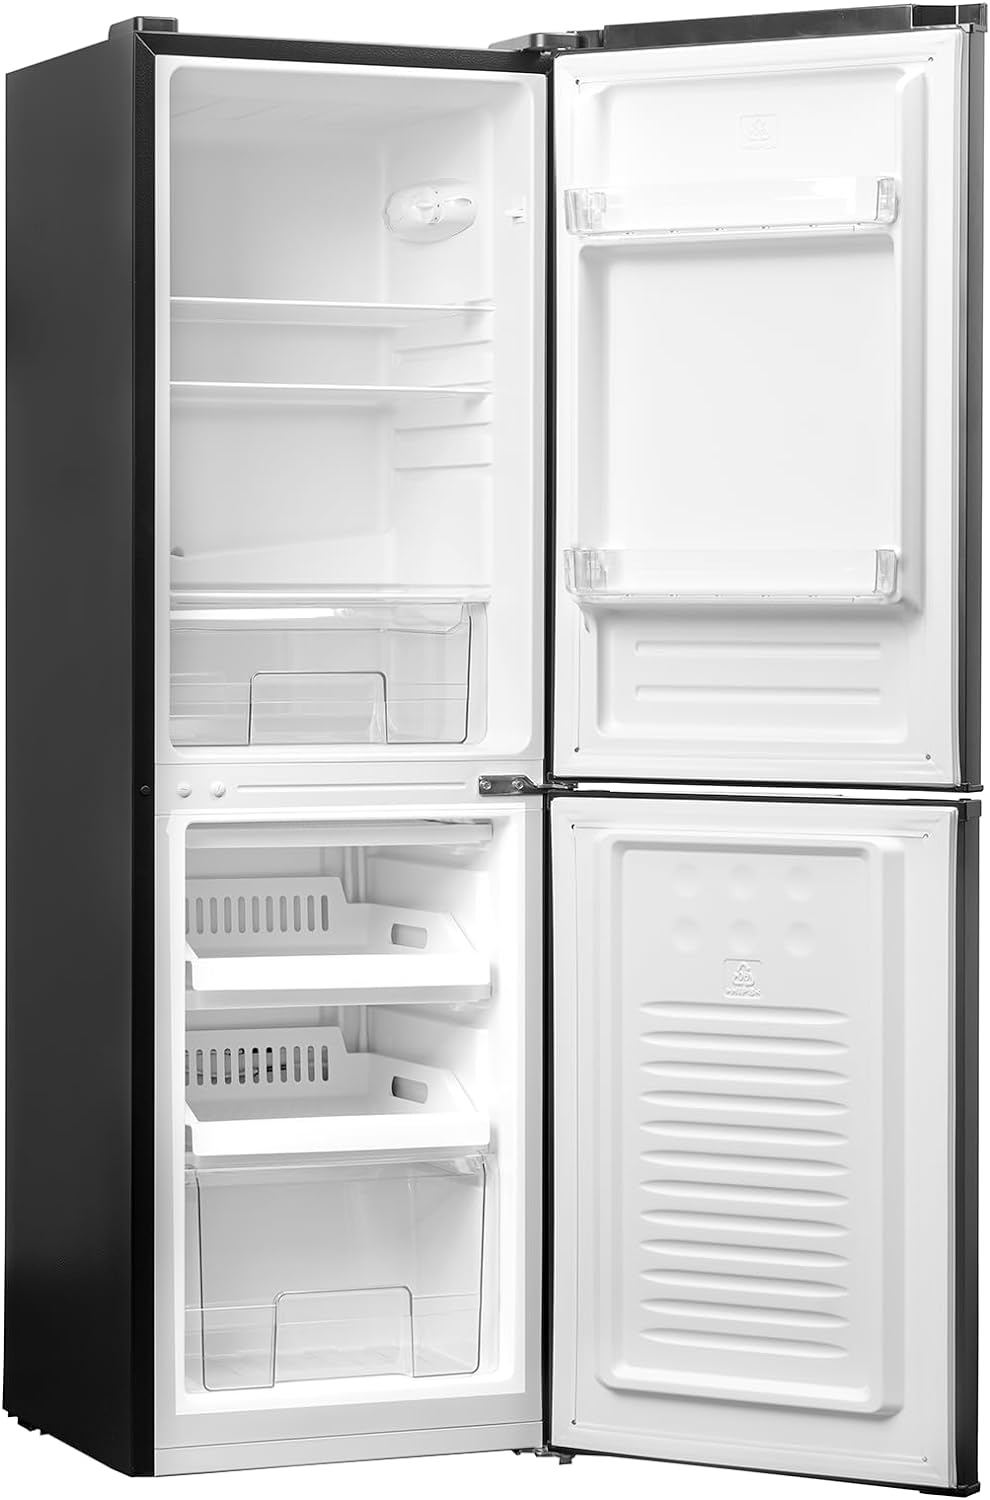 SIA SFF1490BL 50/50 Split Freestanding 153L Combi Fridge Freezer with 4* Freezer Compartment in Black, Includes 2 Years Parts & Labour Warranty - Amazing Gadgets Outlet